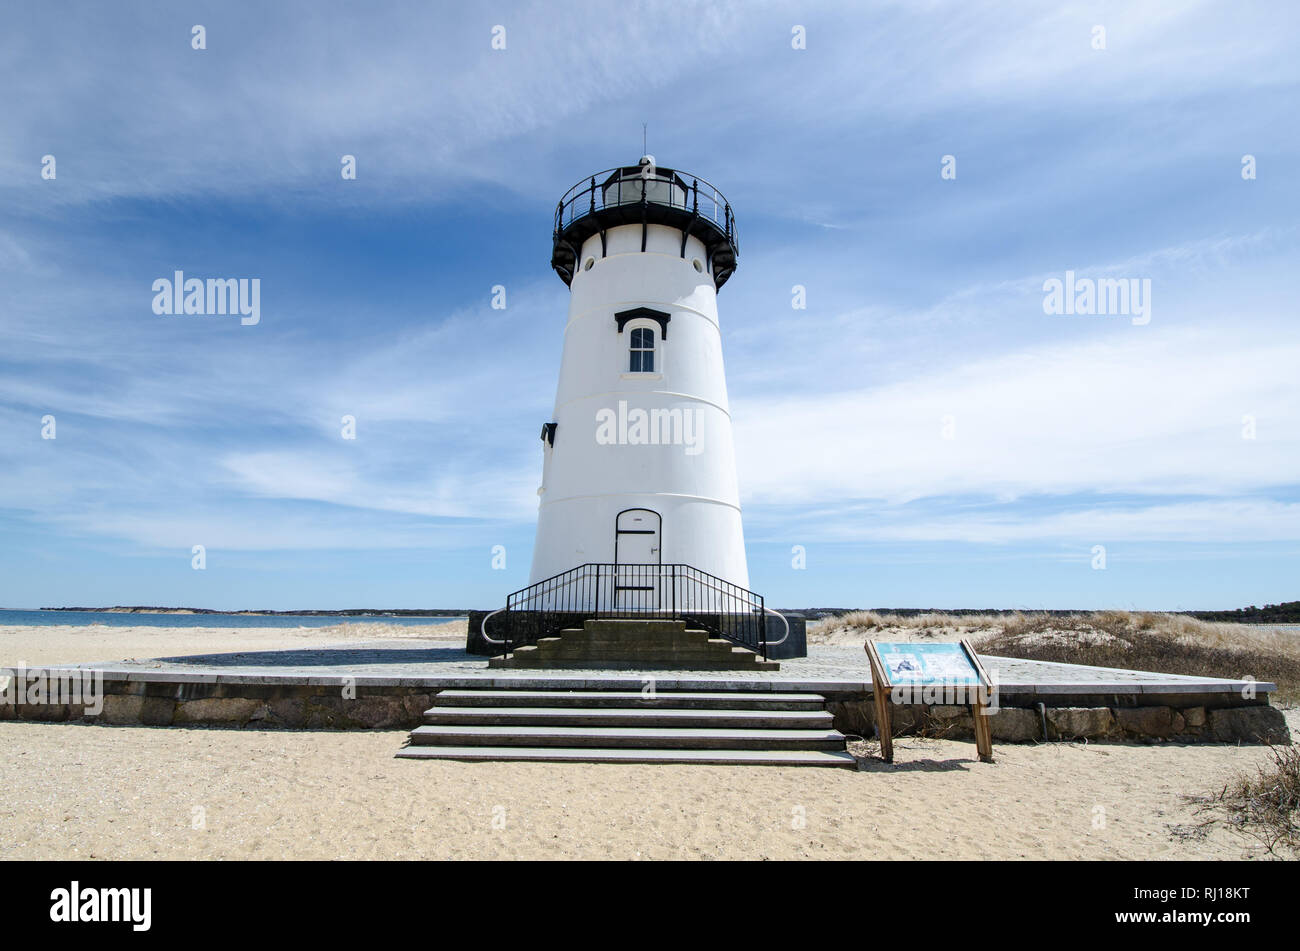 Edgartown Lighthouse, on Martha's Vineyard in Massachusetts - wide angle view. Stock Photo